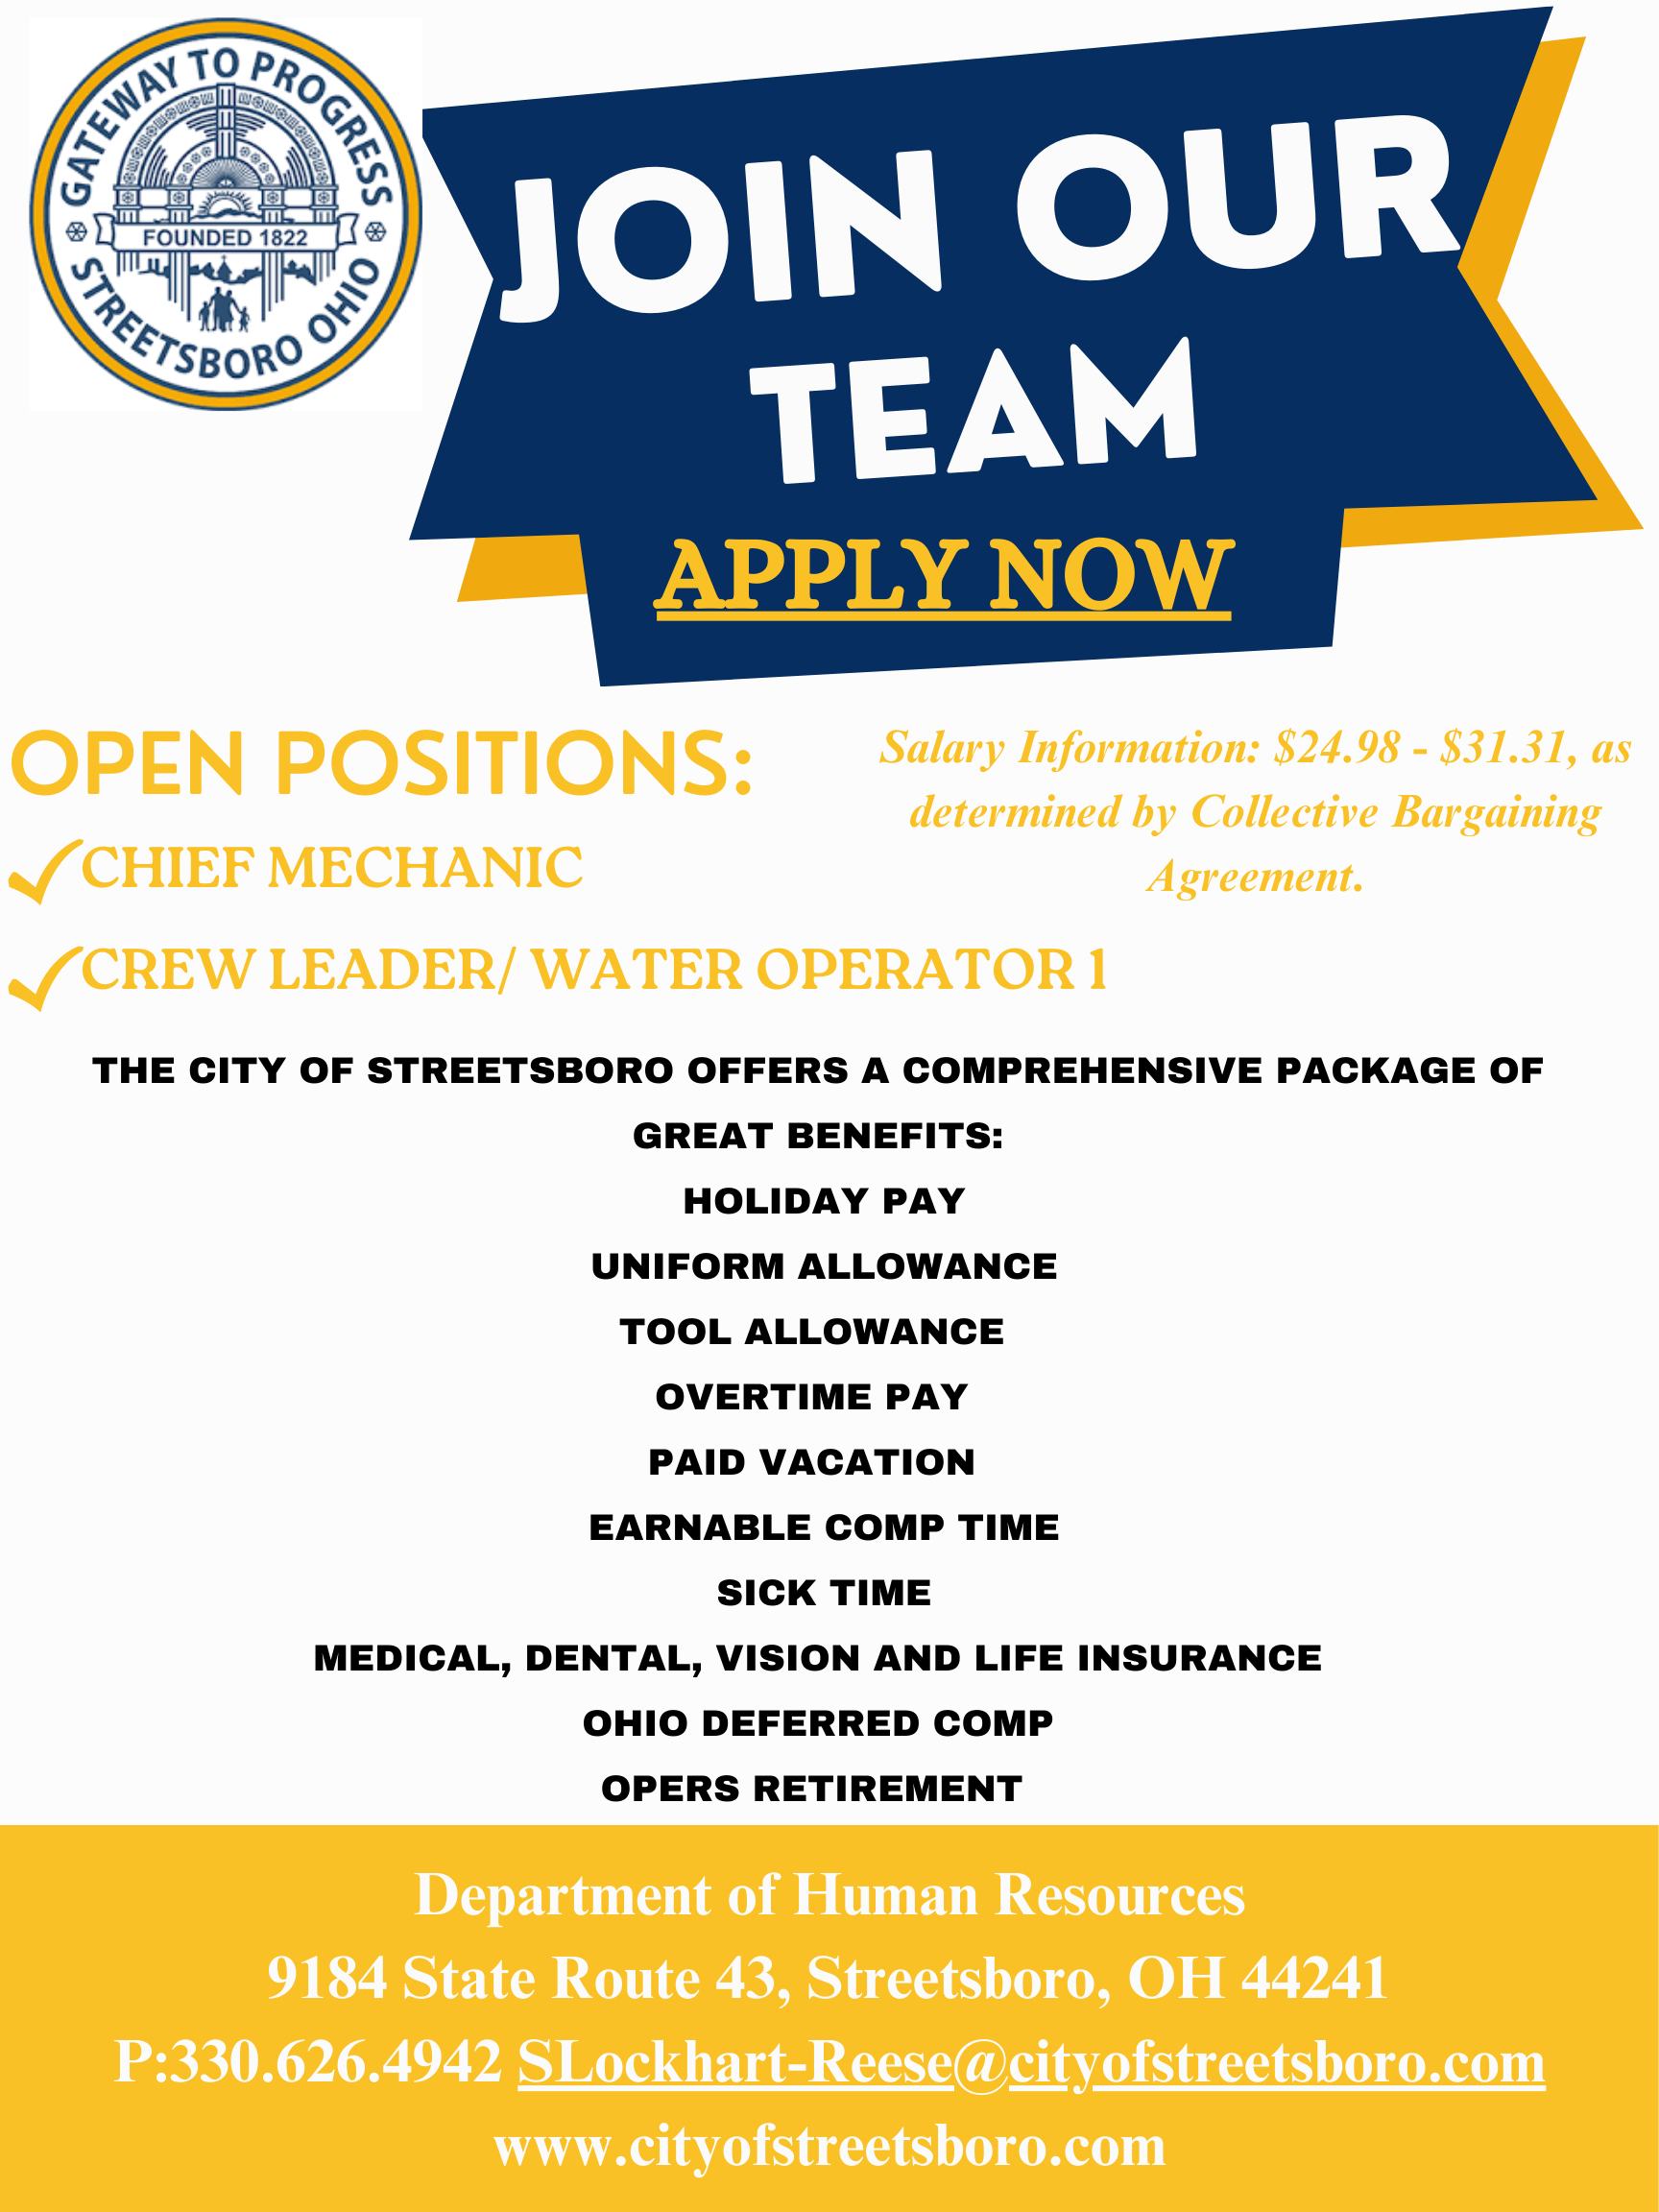 Streetsboro Service Department is now hiring!